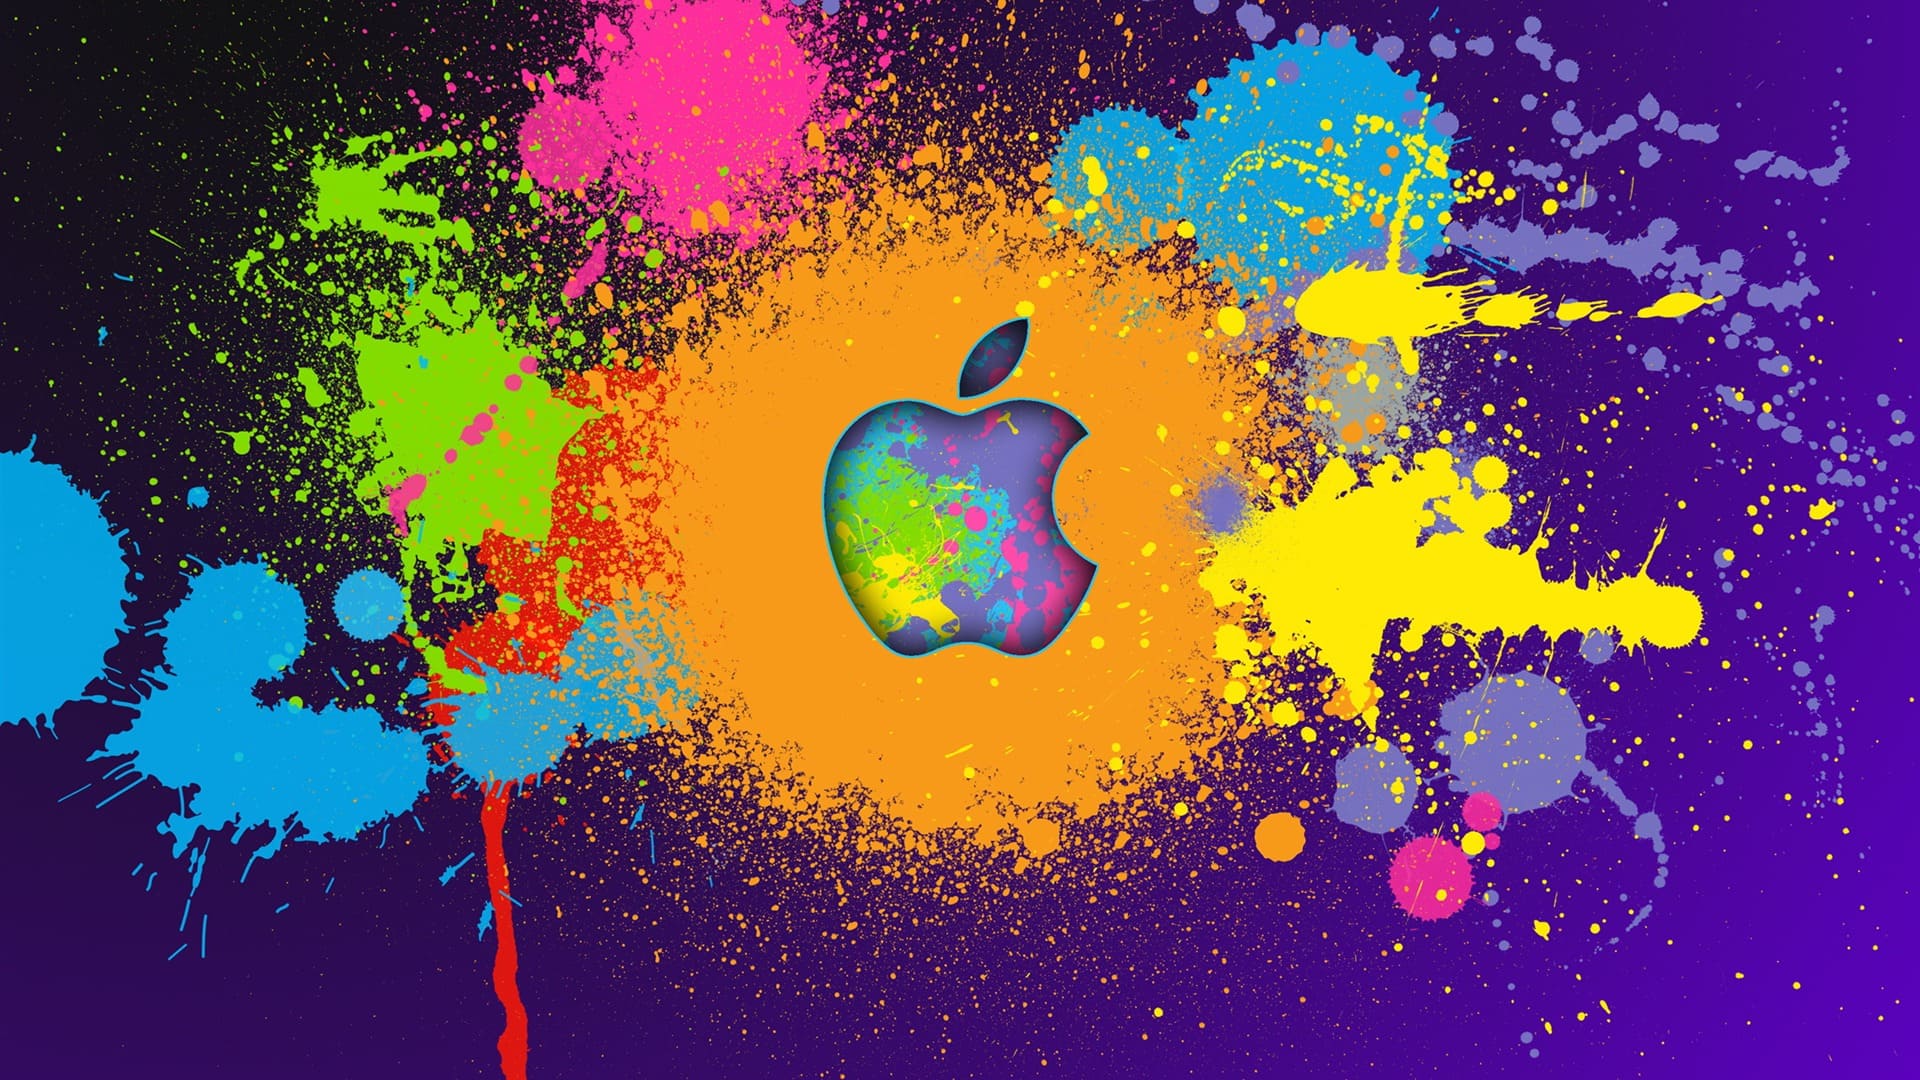 Apple Logo Art Wallpapers